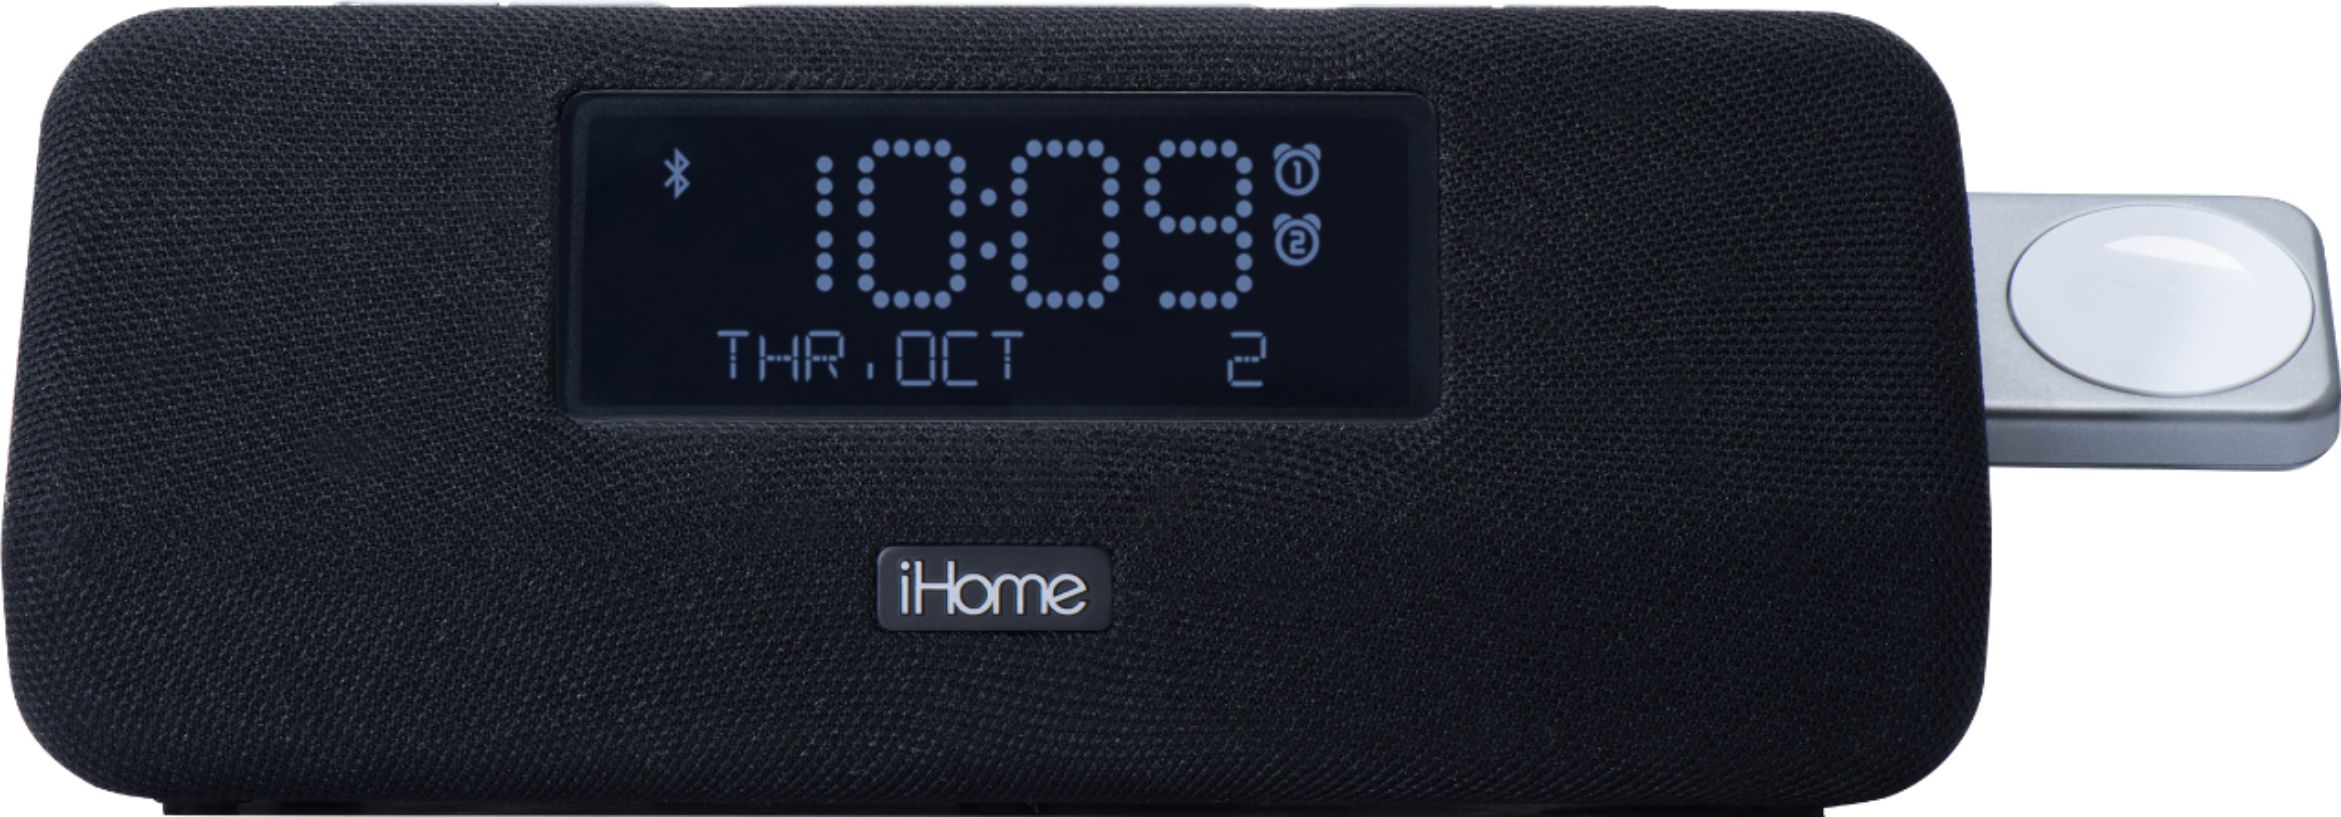 iHome - Bluetooth Alarm Clock Radio - Black